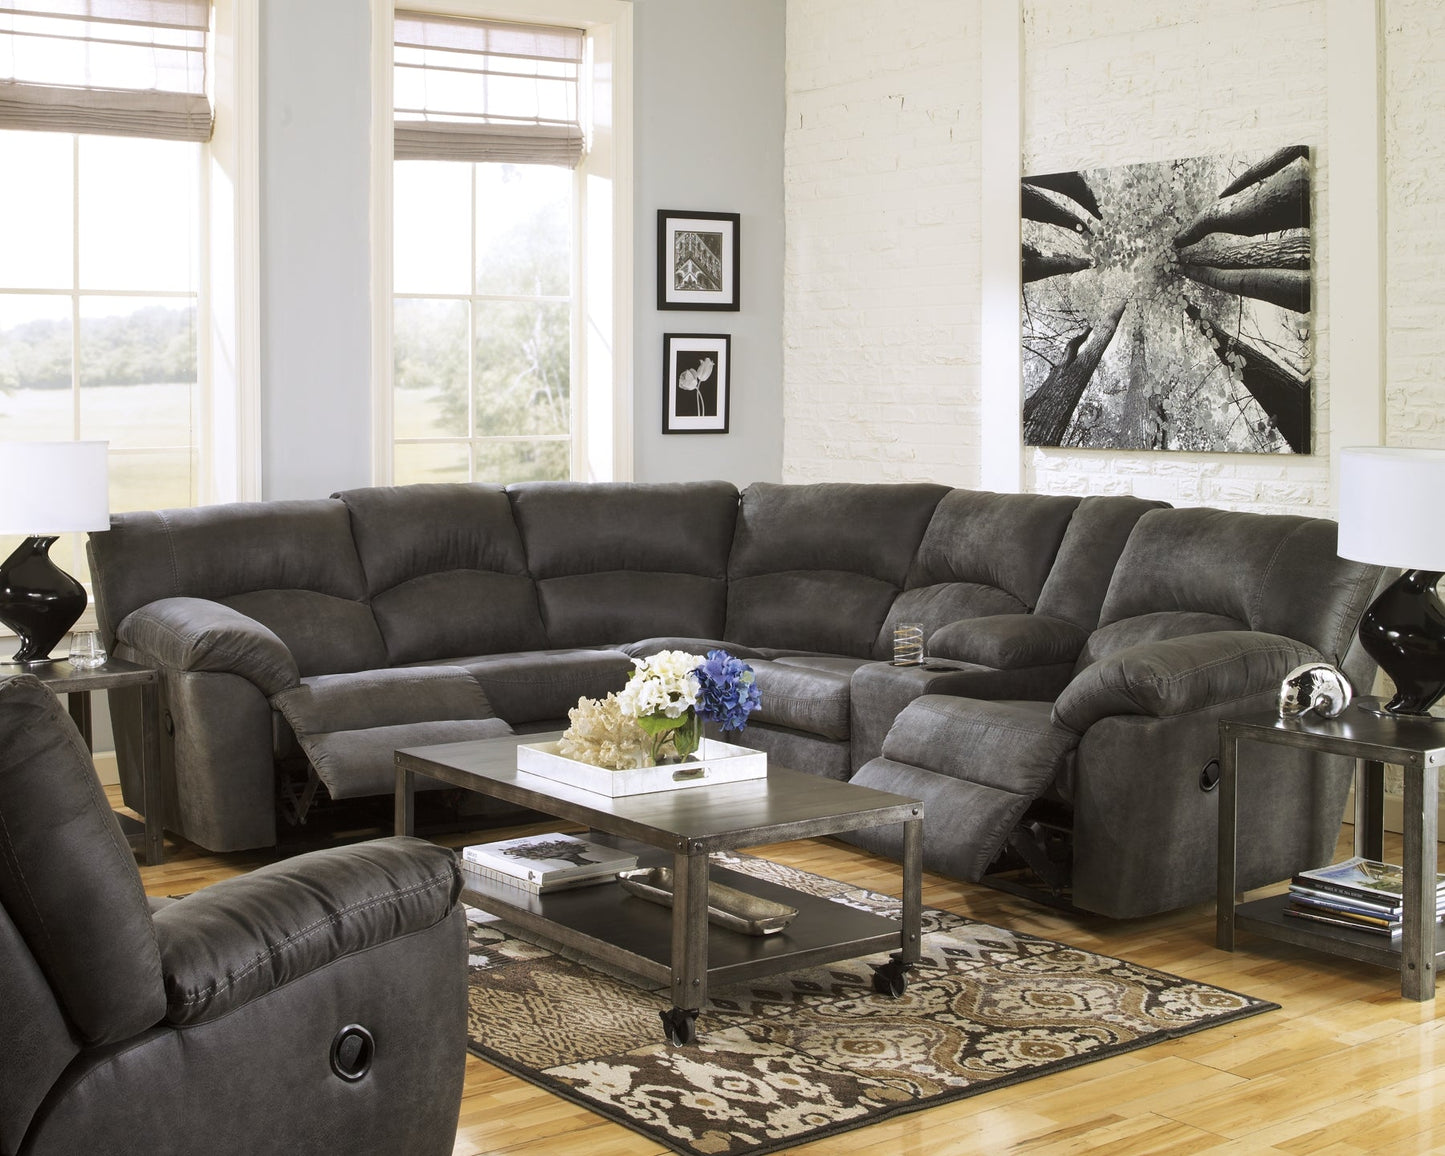 Tambo Rocker Recliner at Cloud 9 Mattress & Furniture furniture, home furnishing, home decor